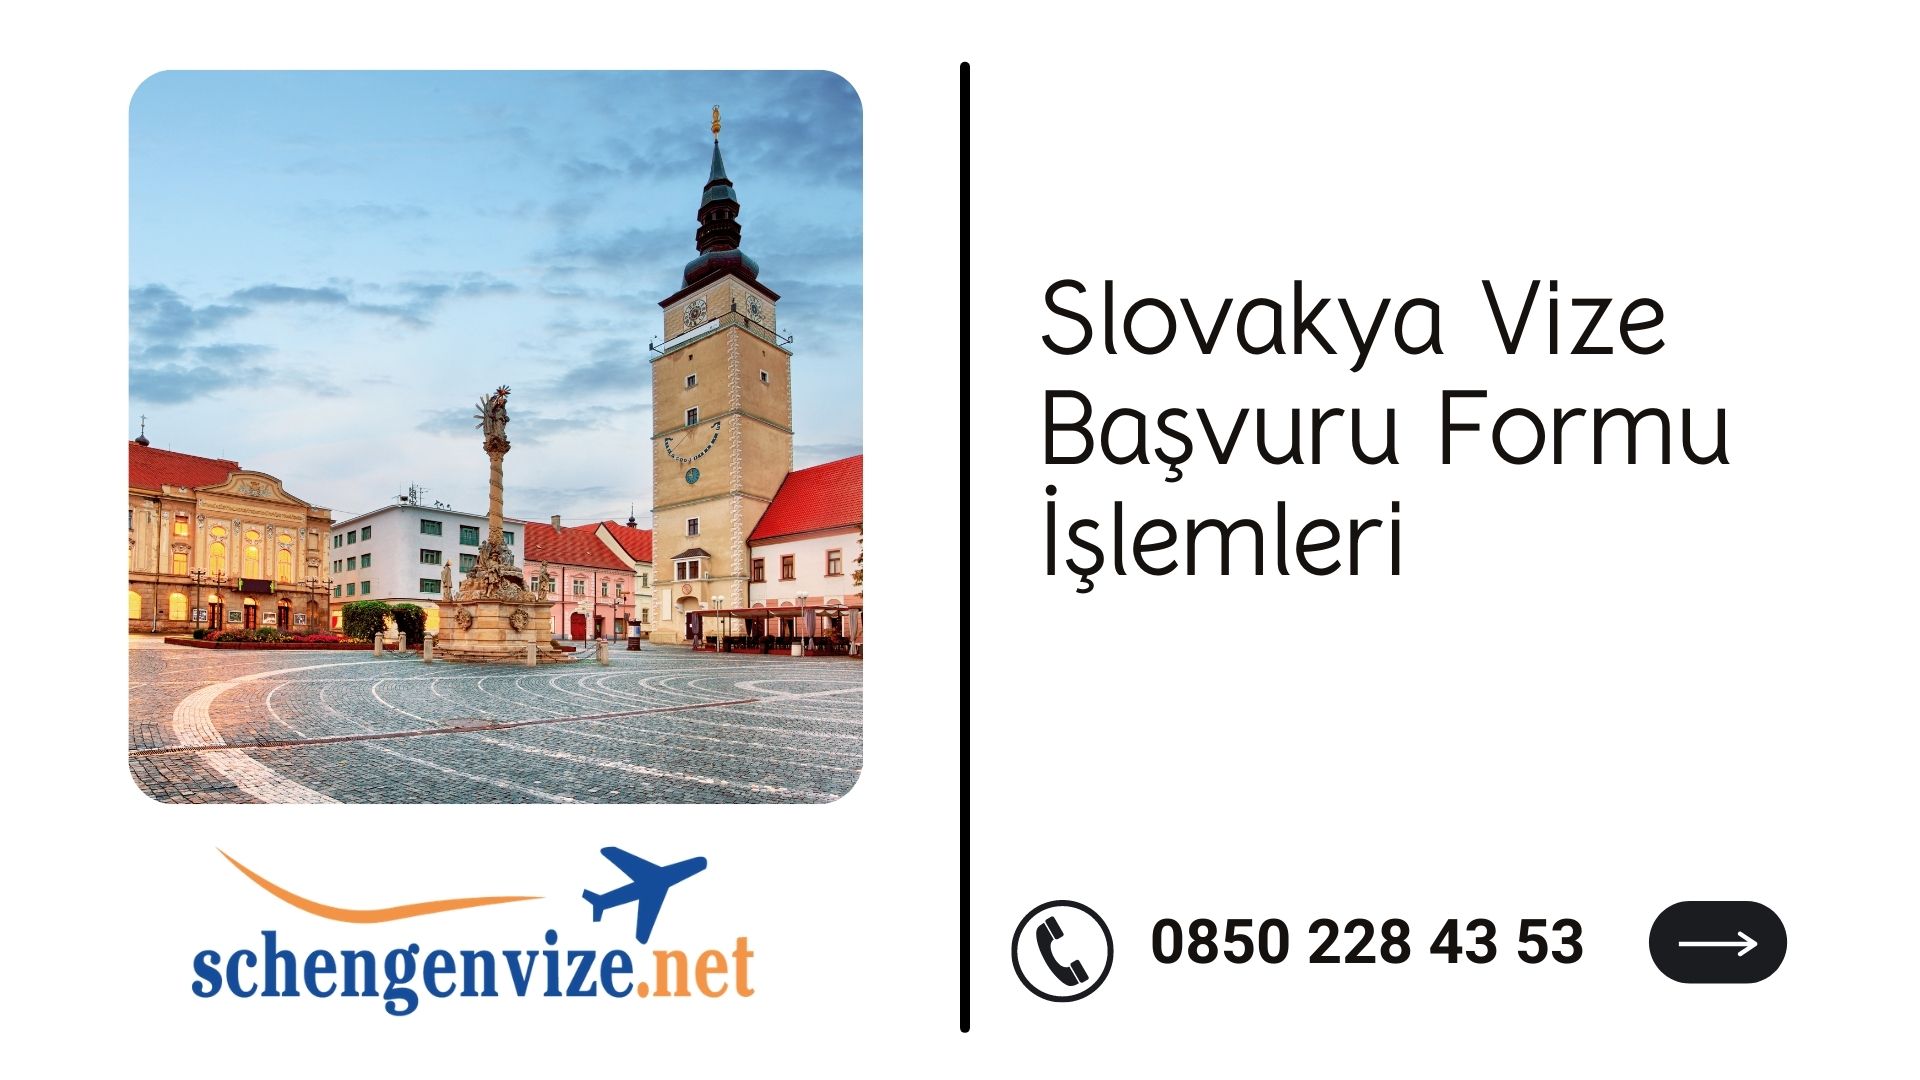 Slovakya Vize Başvuru Formu İşlemleri